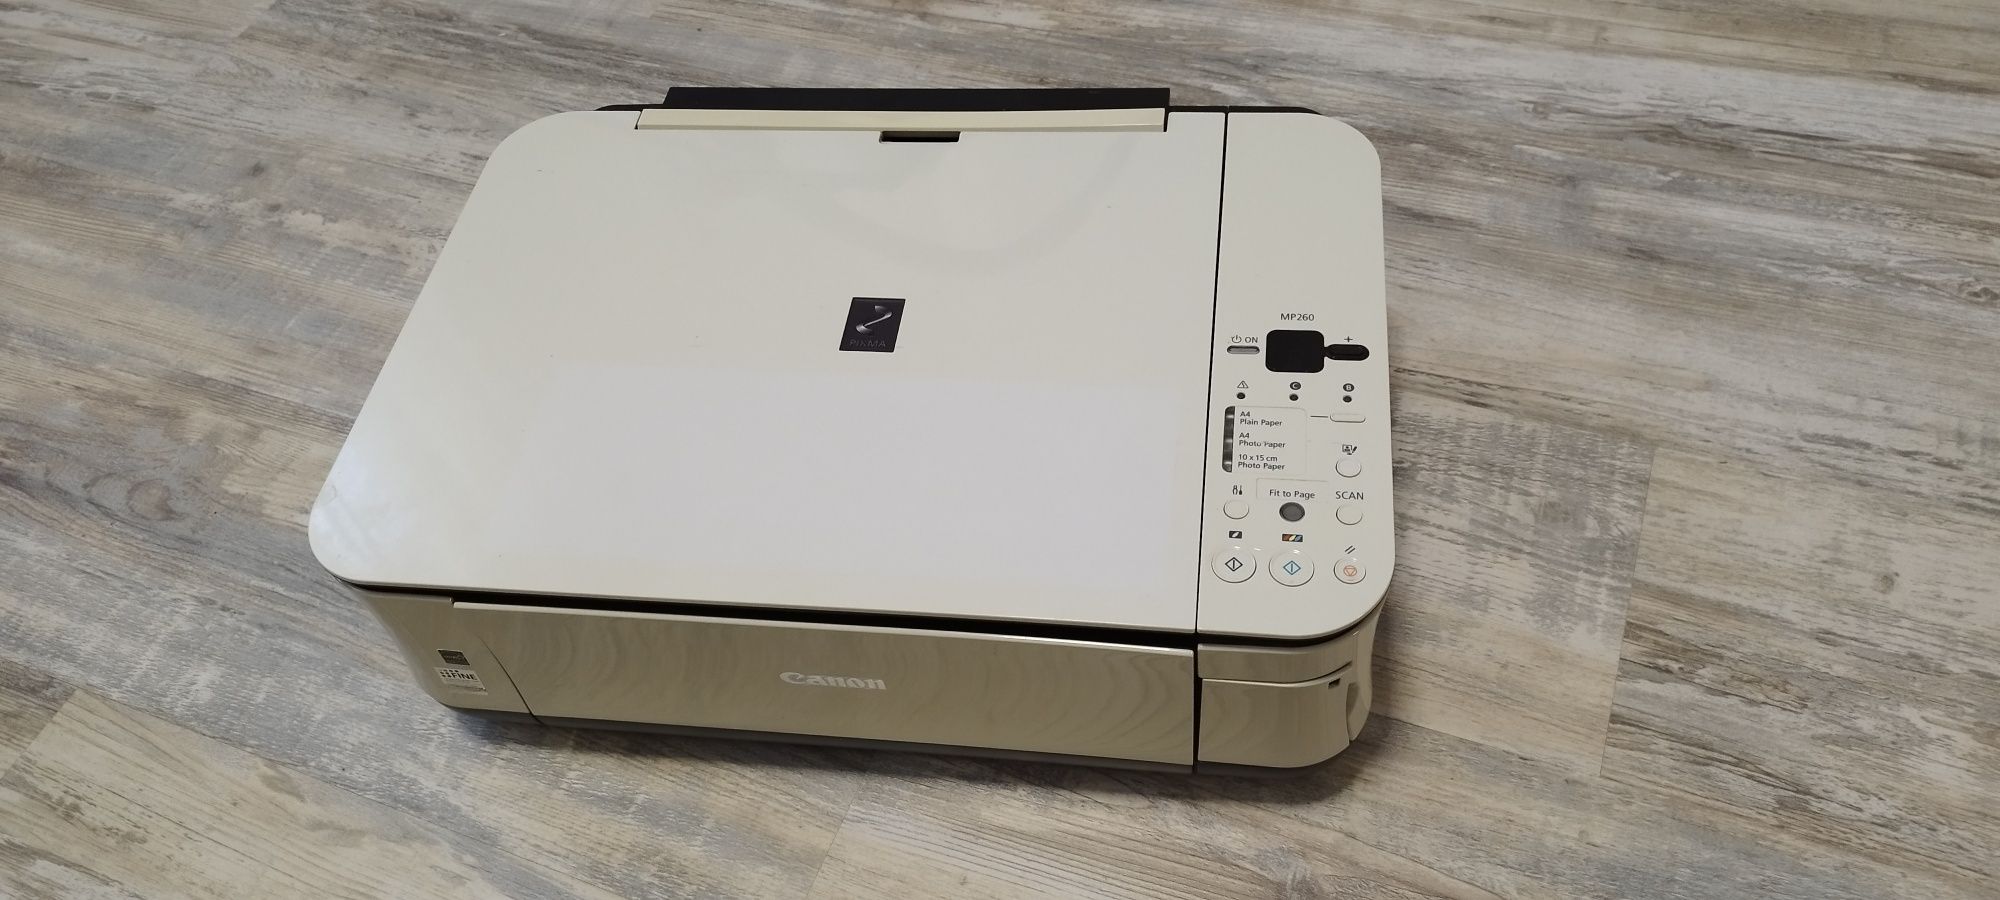 Принтер 3в1, мултифункционален принтер